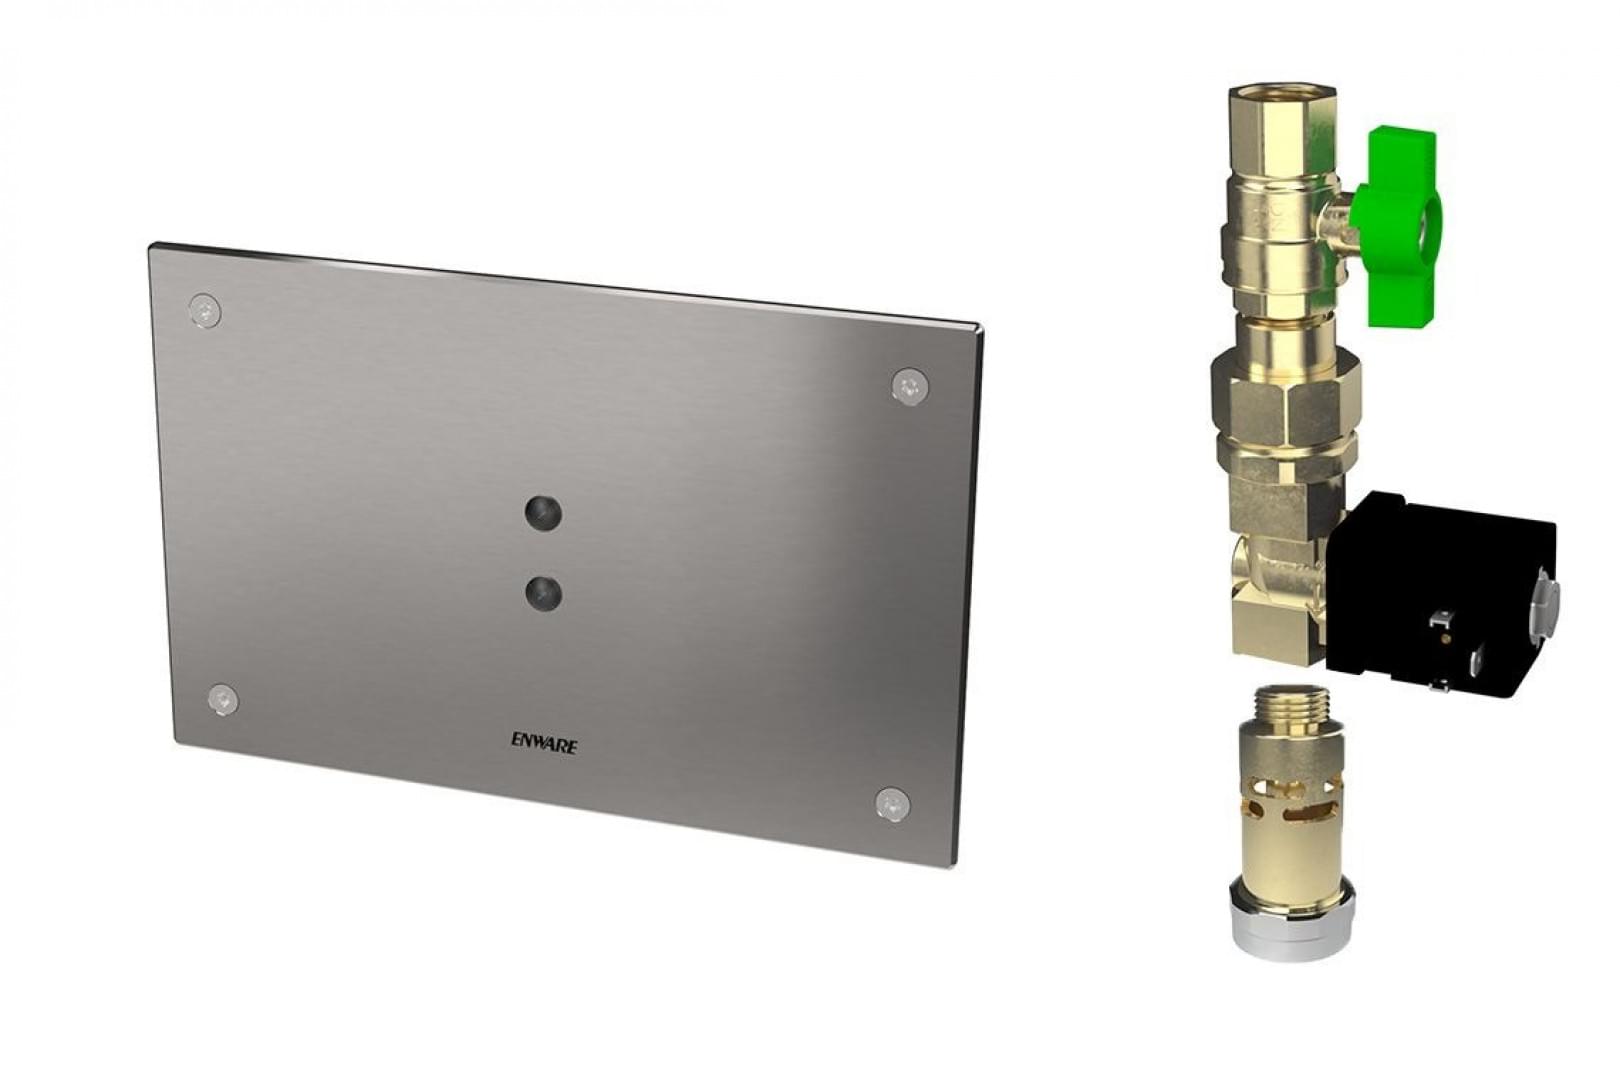 Sensor-Activated Urinal Flushing System - EMF301M-3 from Enware